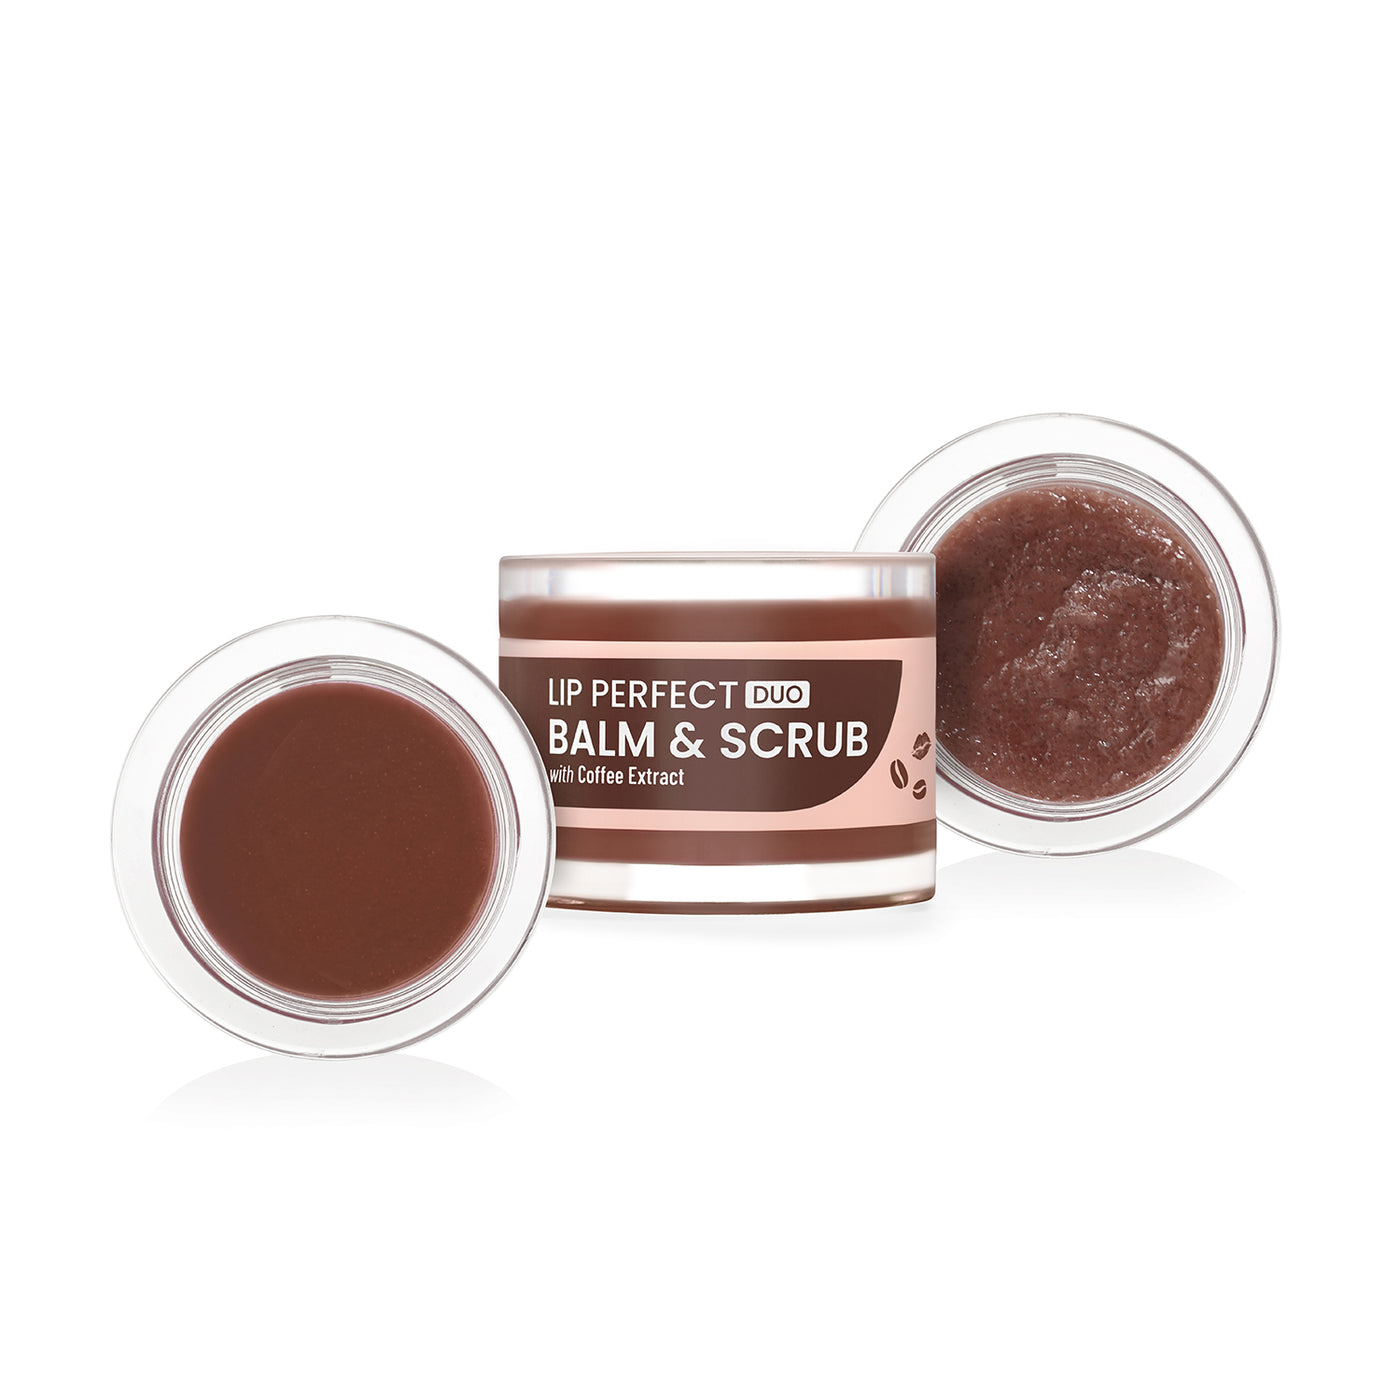 Lip Perfect Duo Balm & Scrub with Coffee Extract